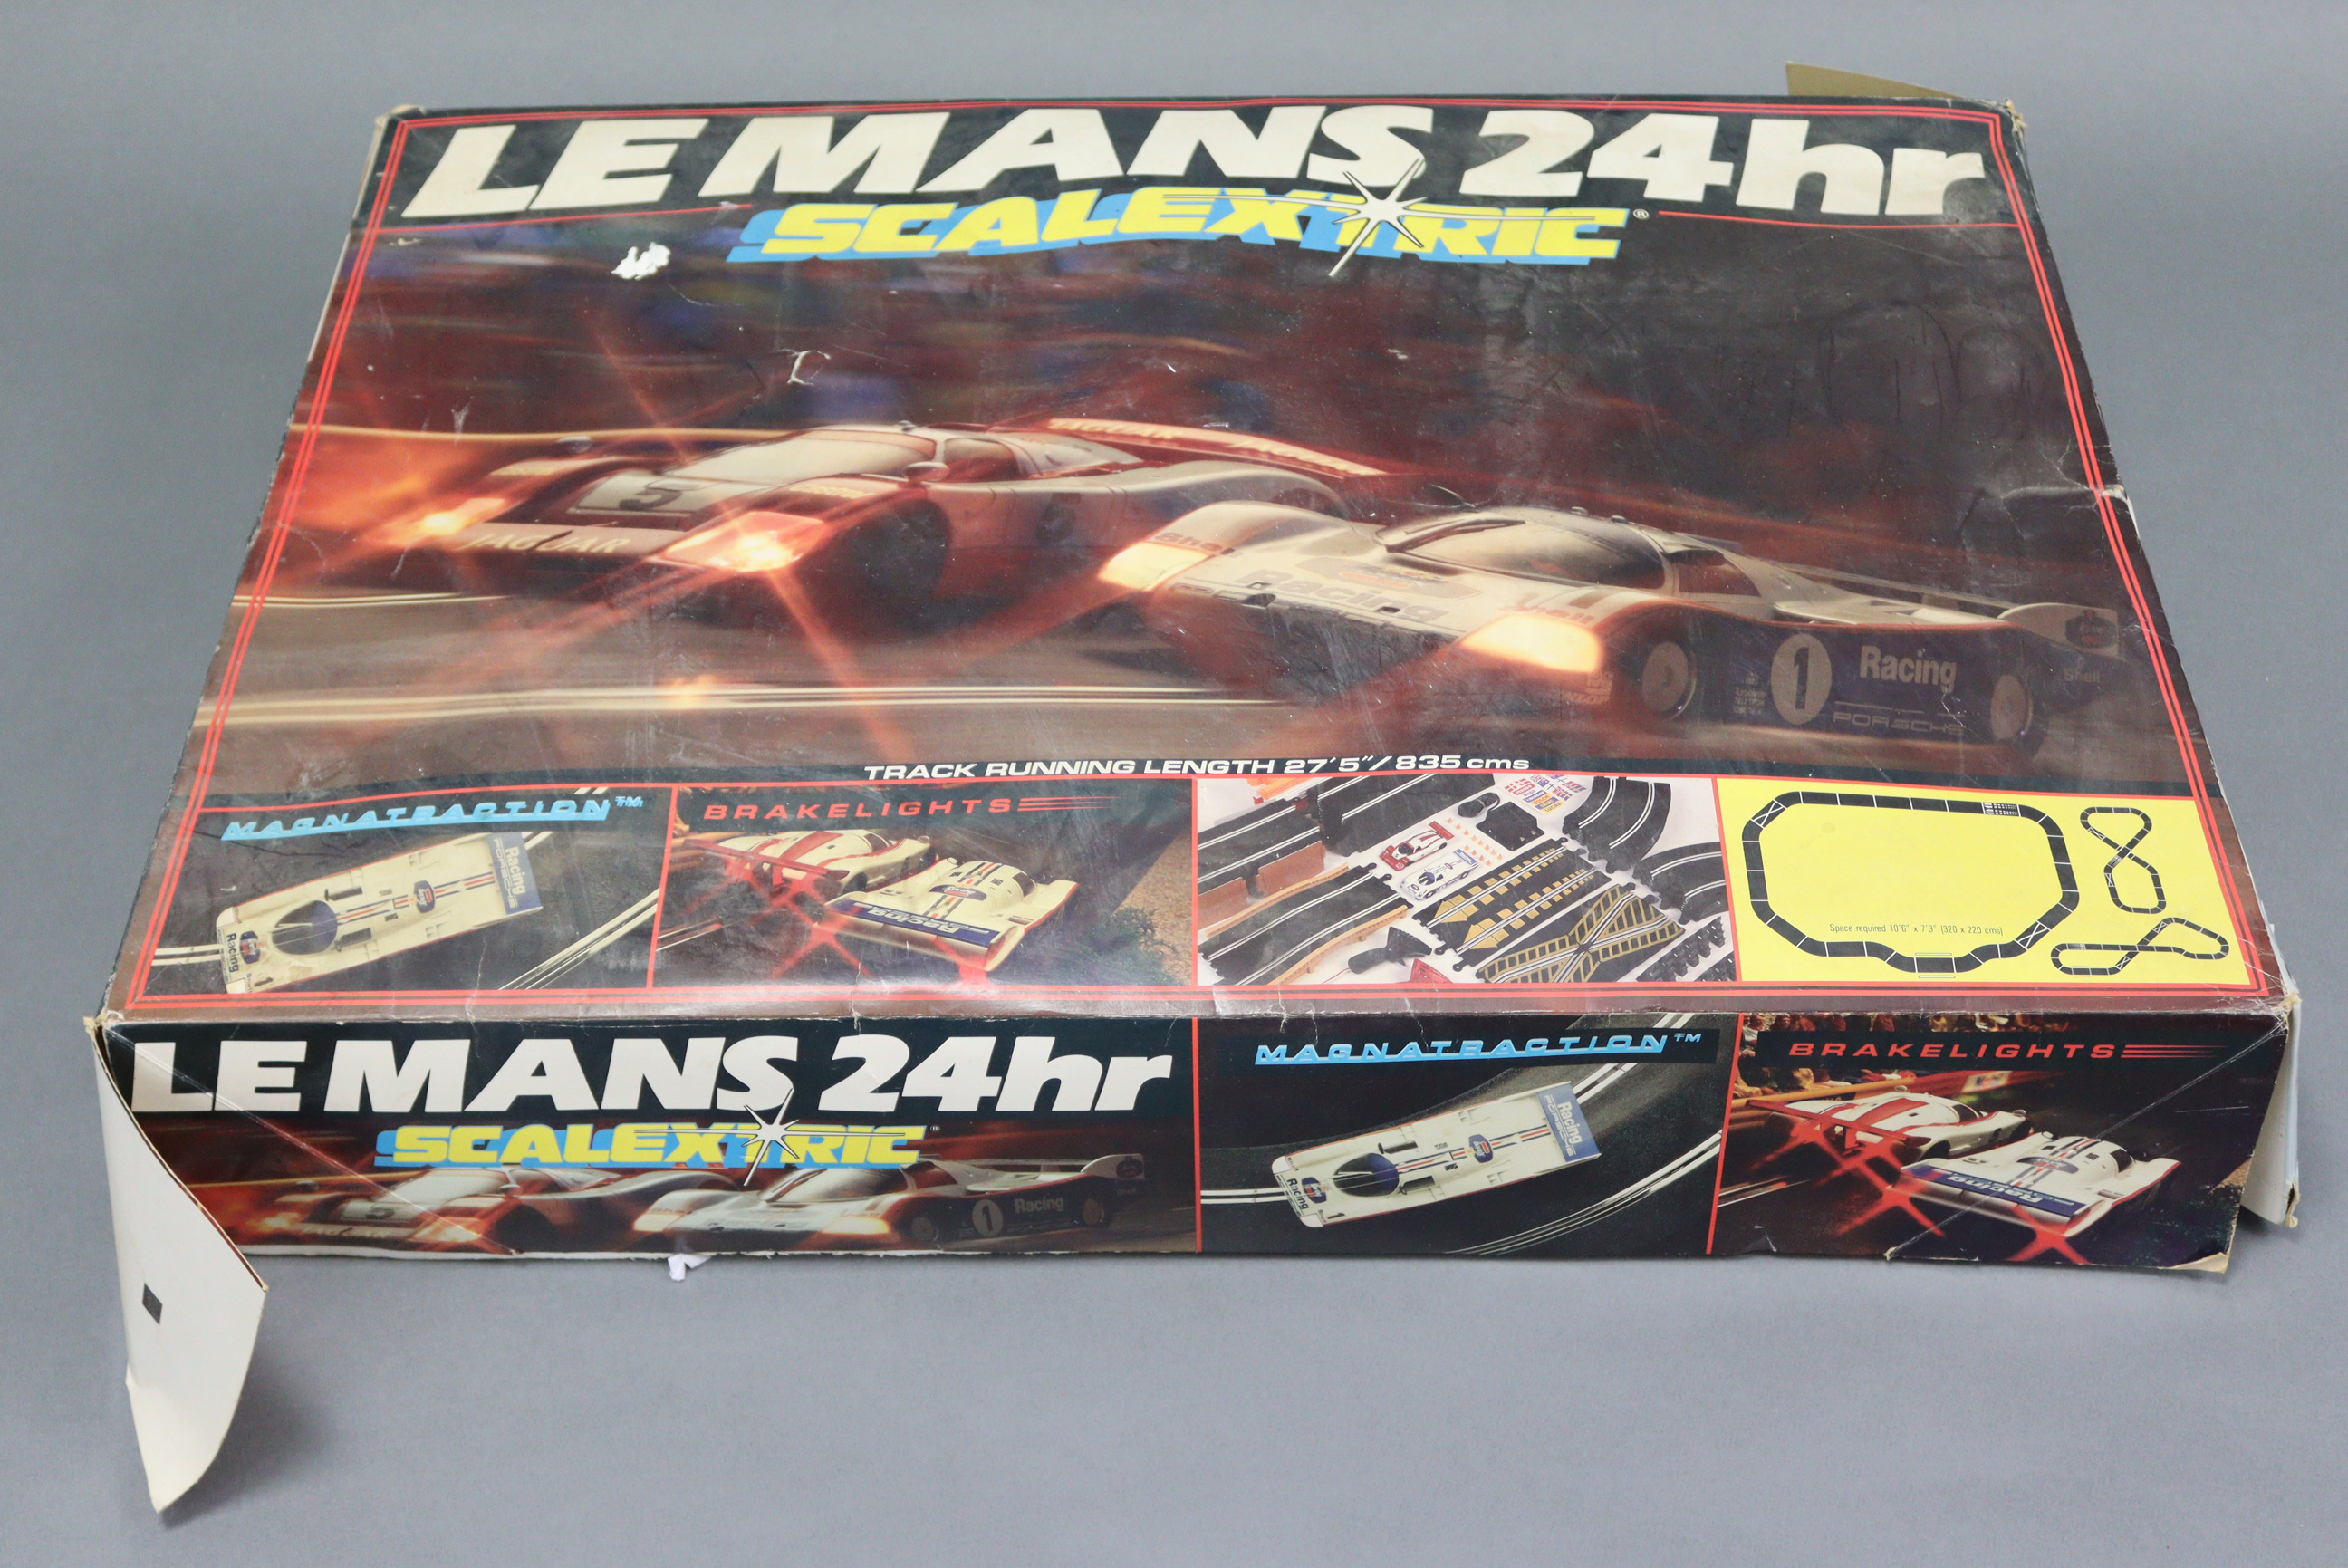 A Scalextric “Le Mans 24hr” racing-car set, boxed.